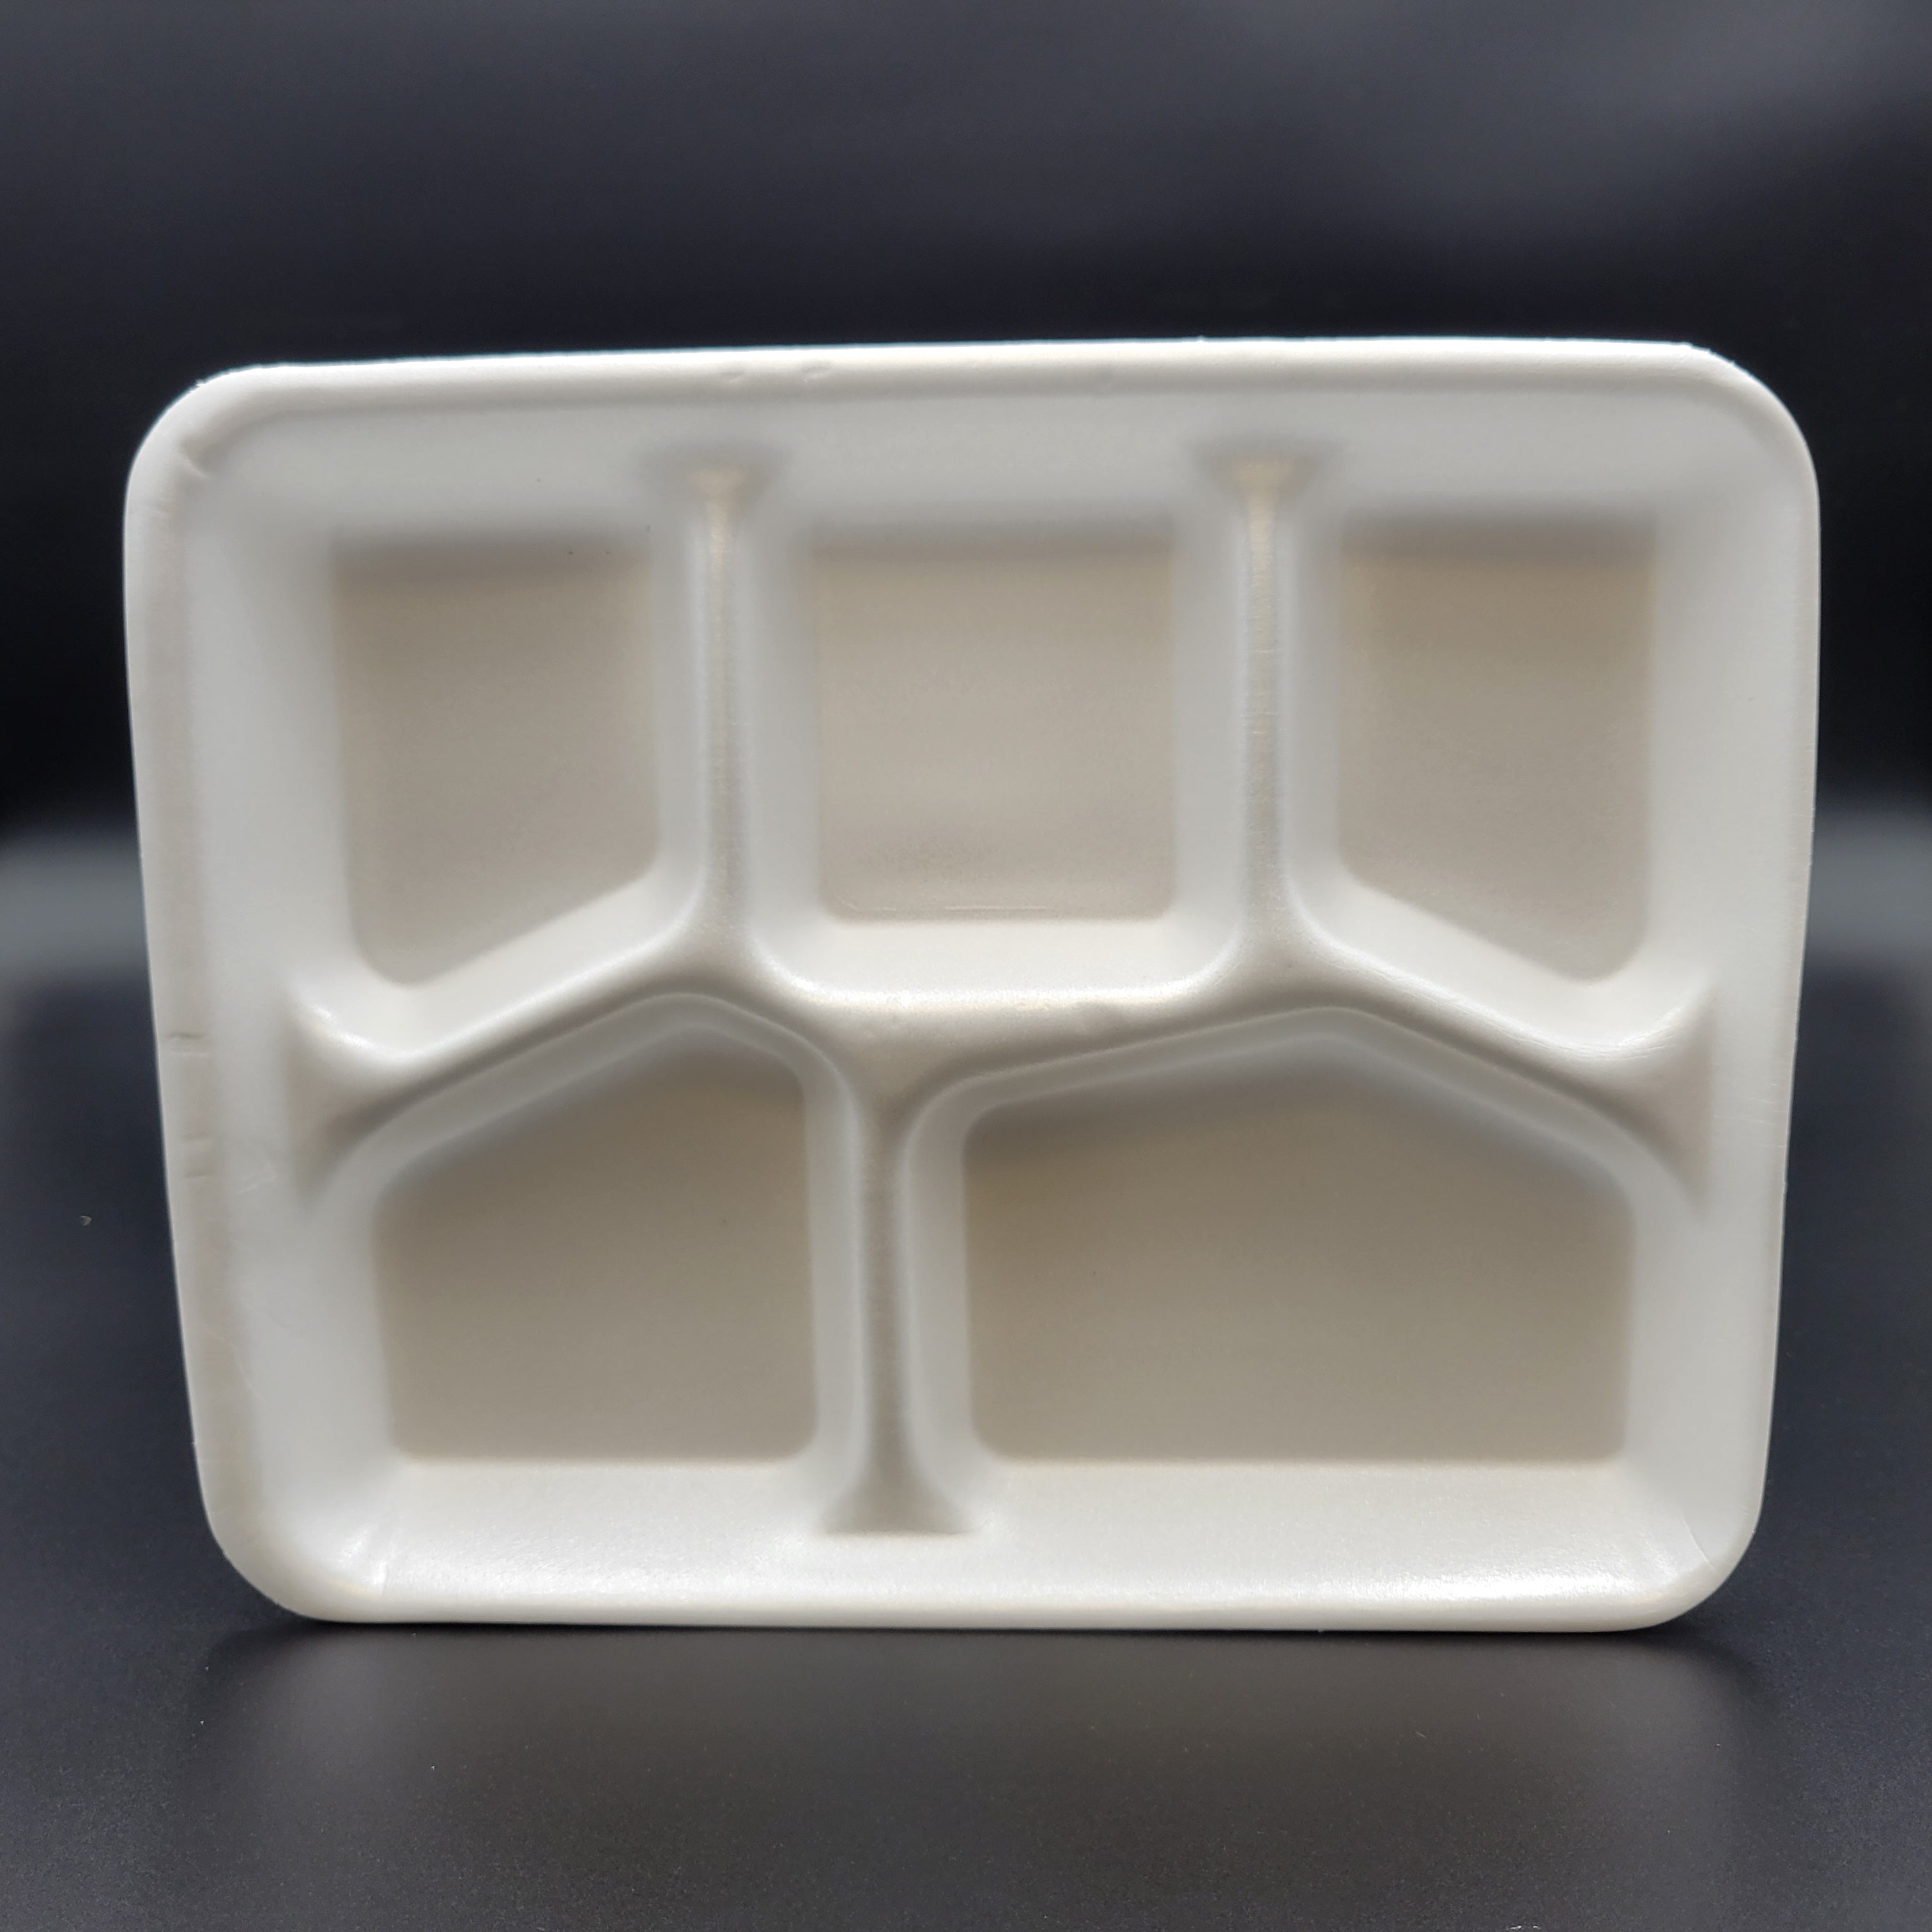 White Five Compartment Foam Serving Tray 8-3/8" x 10-3/8" x 1-3/16" - 500/Case